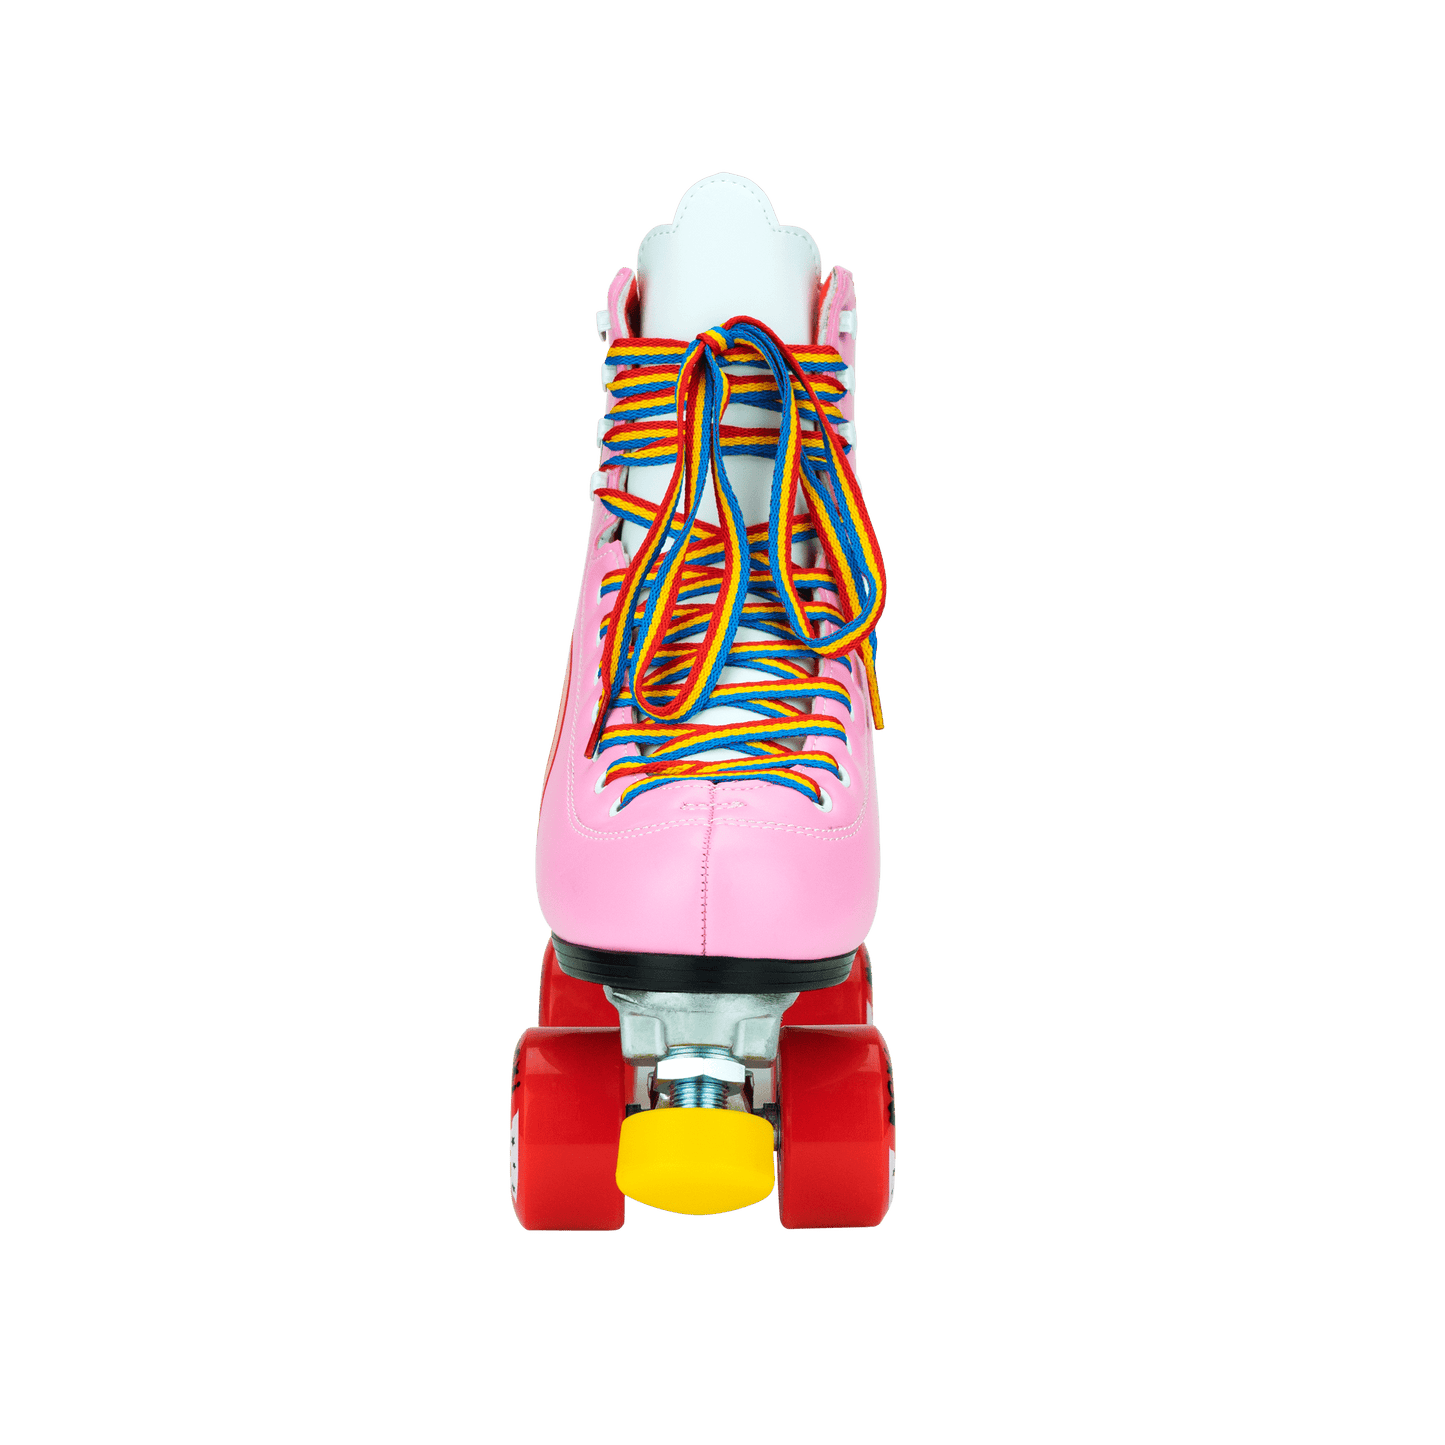 Moxi Rainbow Rider Pink Heart Skates - ON SALE